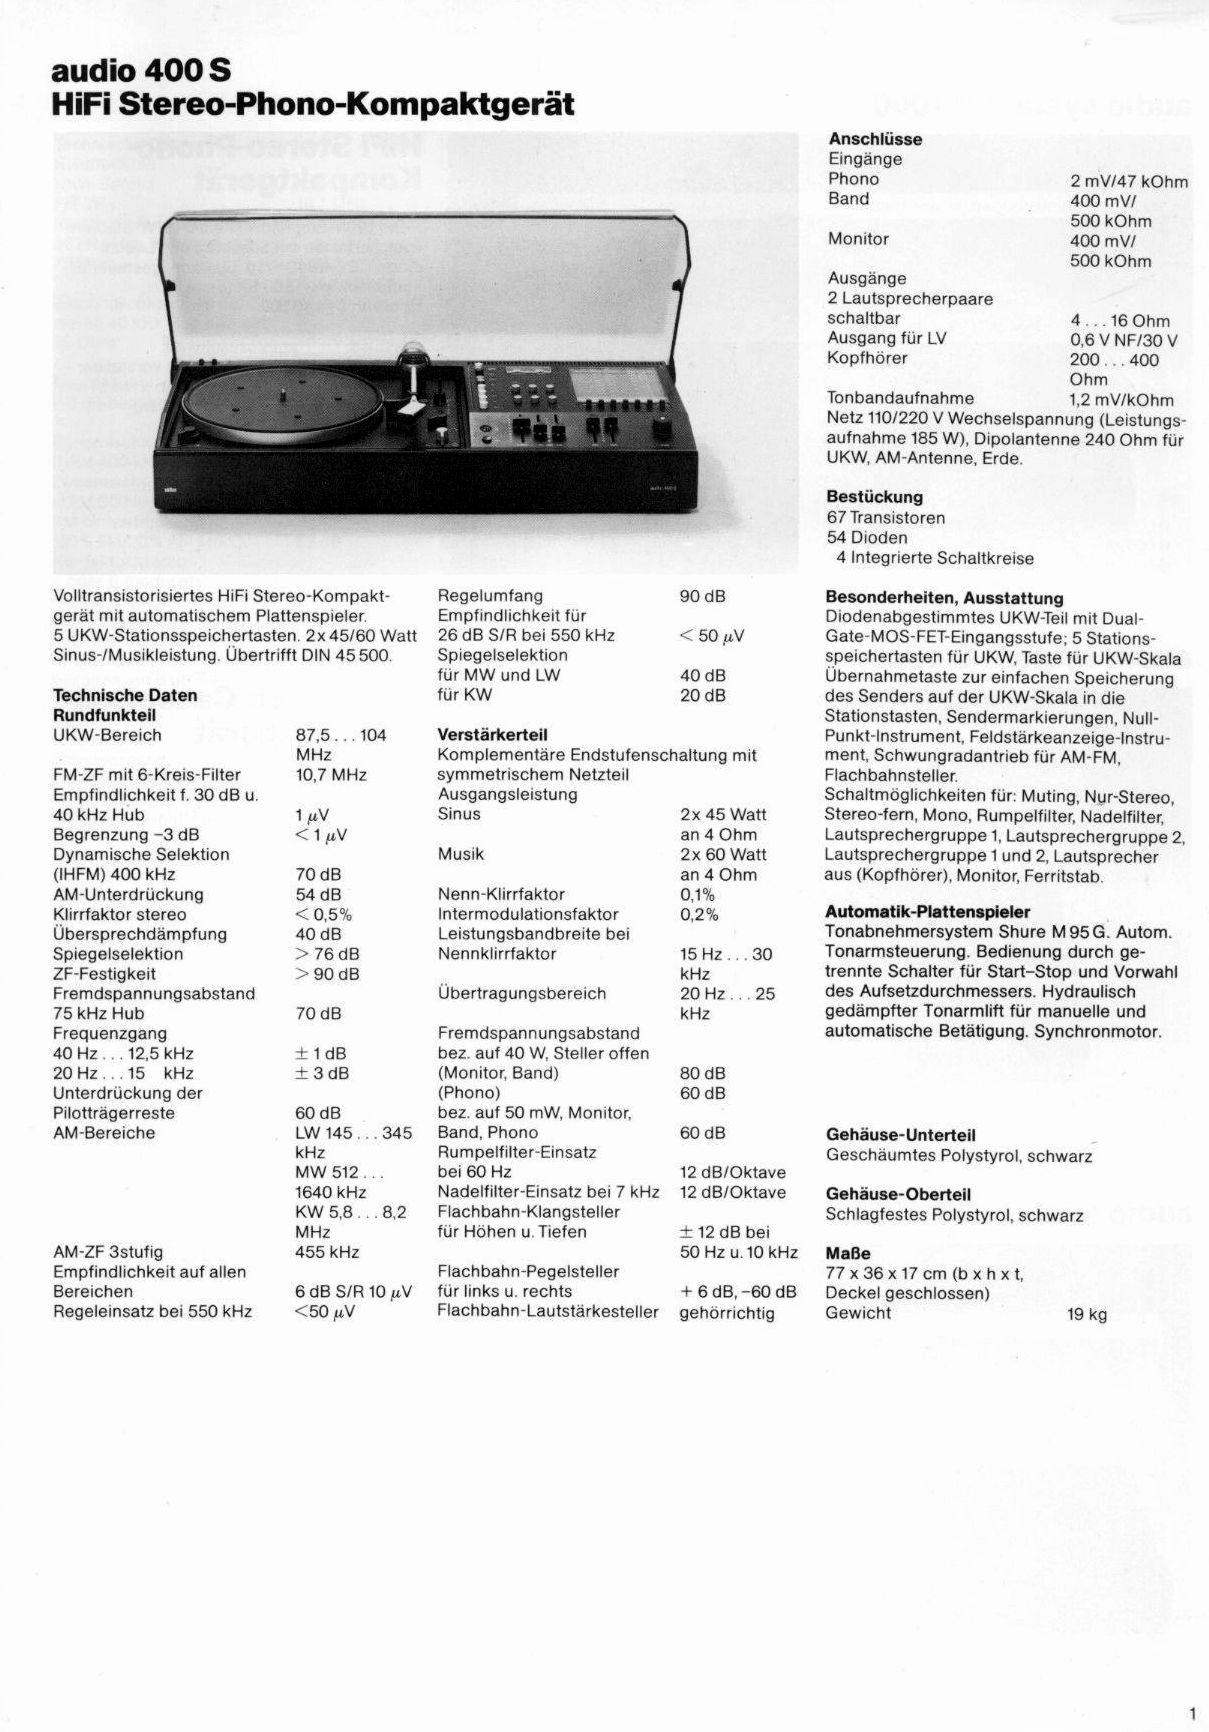 Braun Audio 400 S-Prospekt-1.jpg